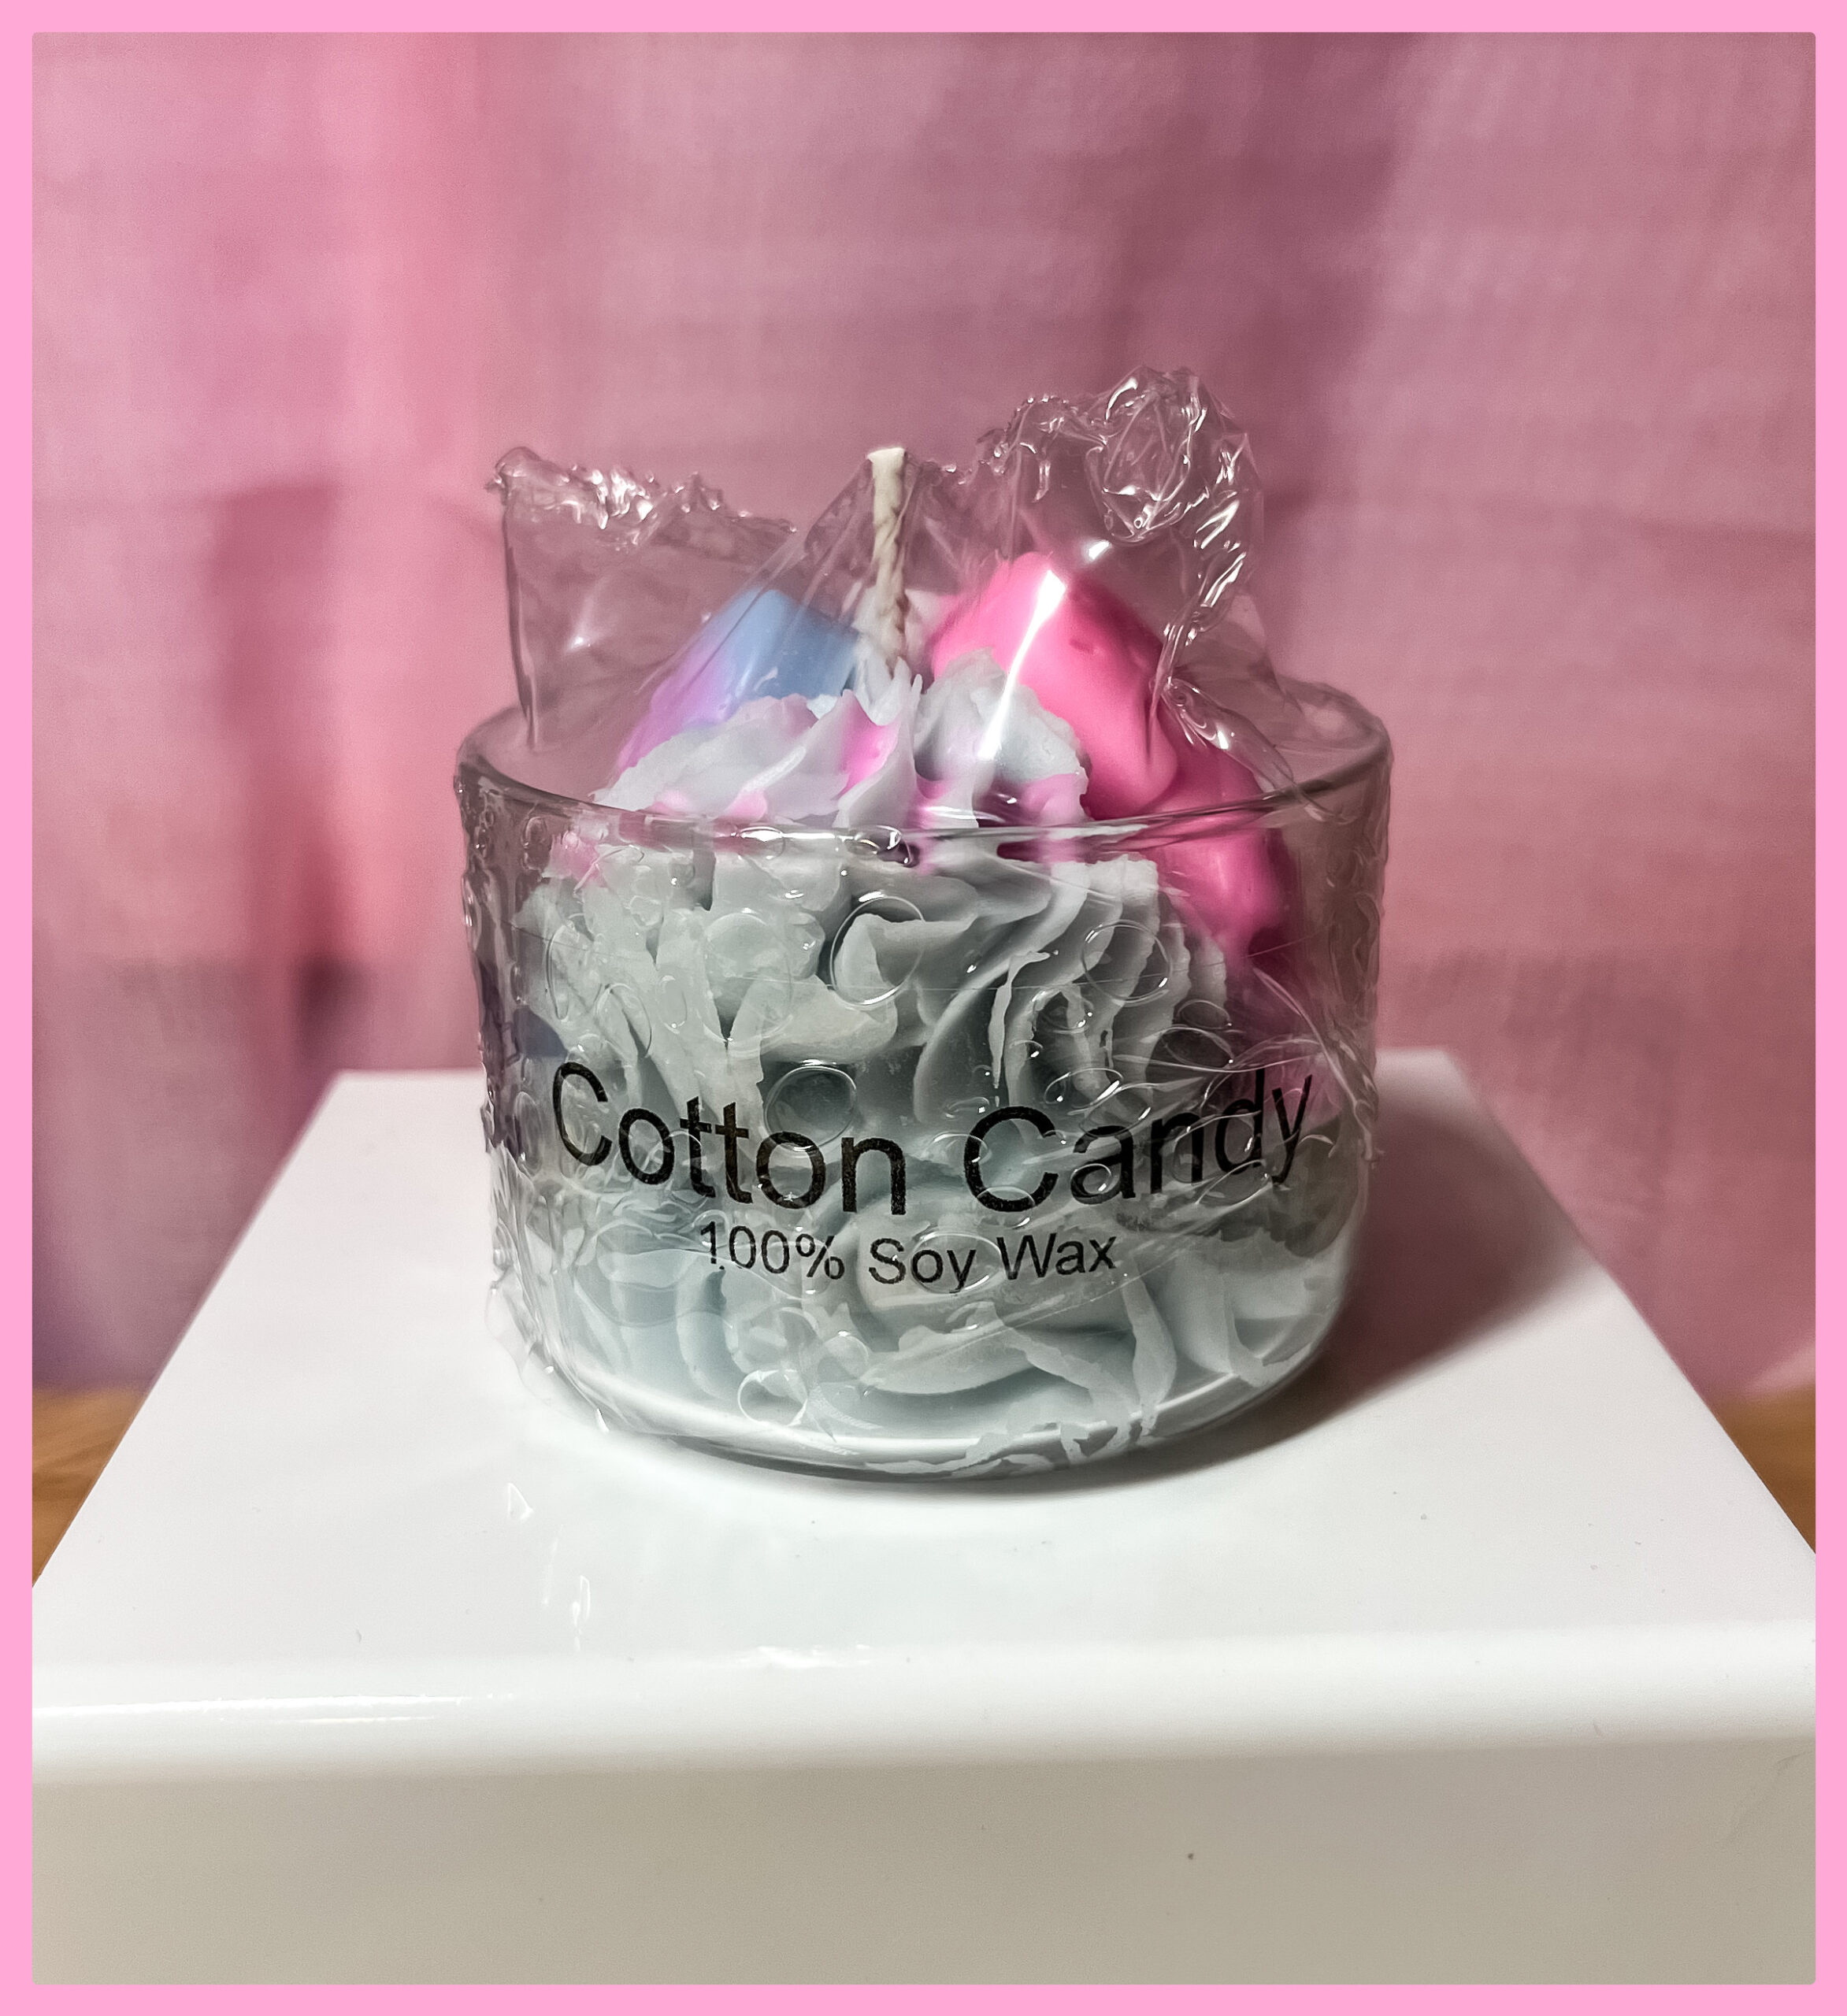 Cotton Candy Dessert Candle 4 oz